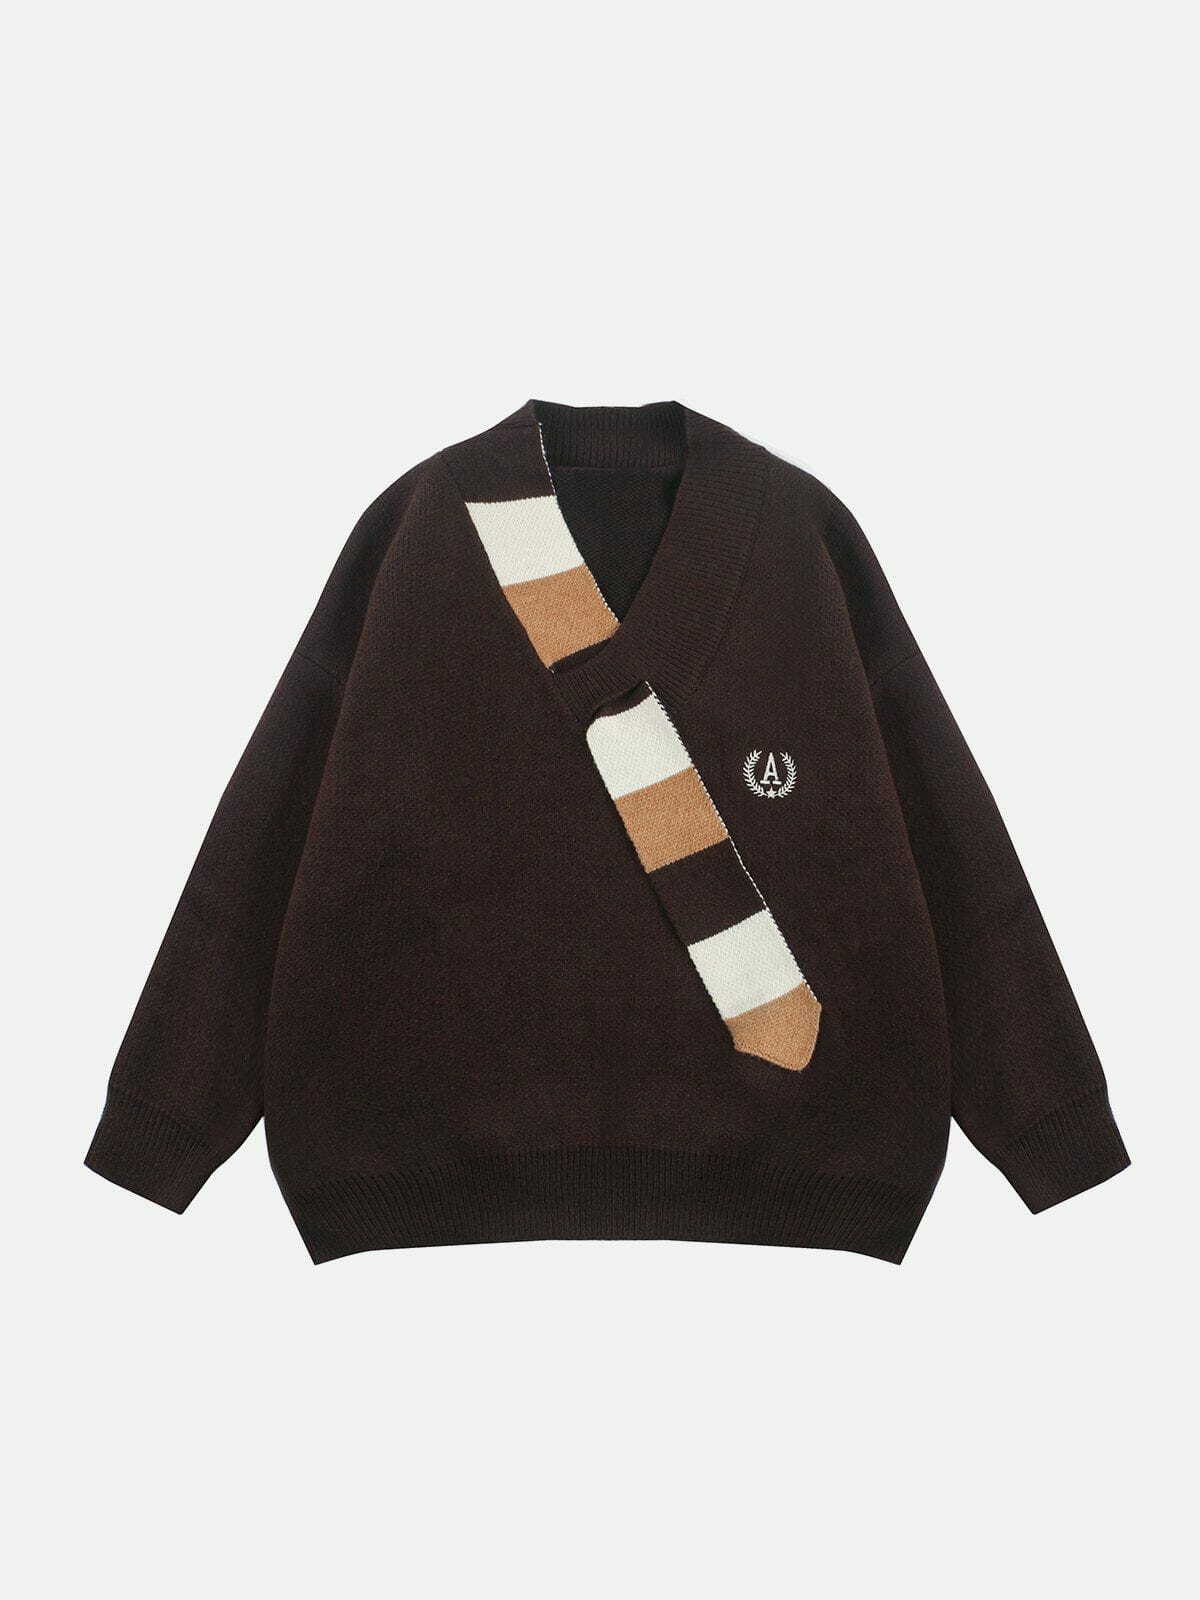 vibrant vneck sweater chic & cozy streetwear 3134